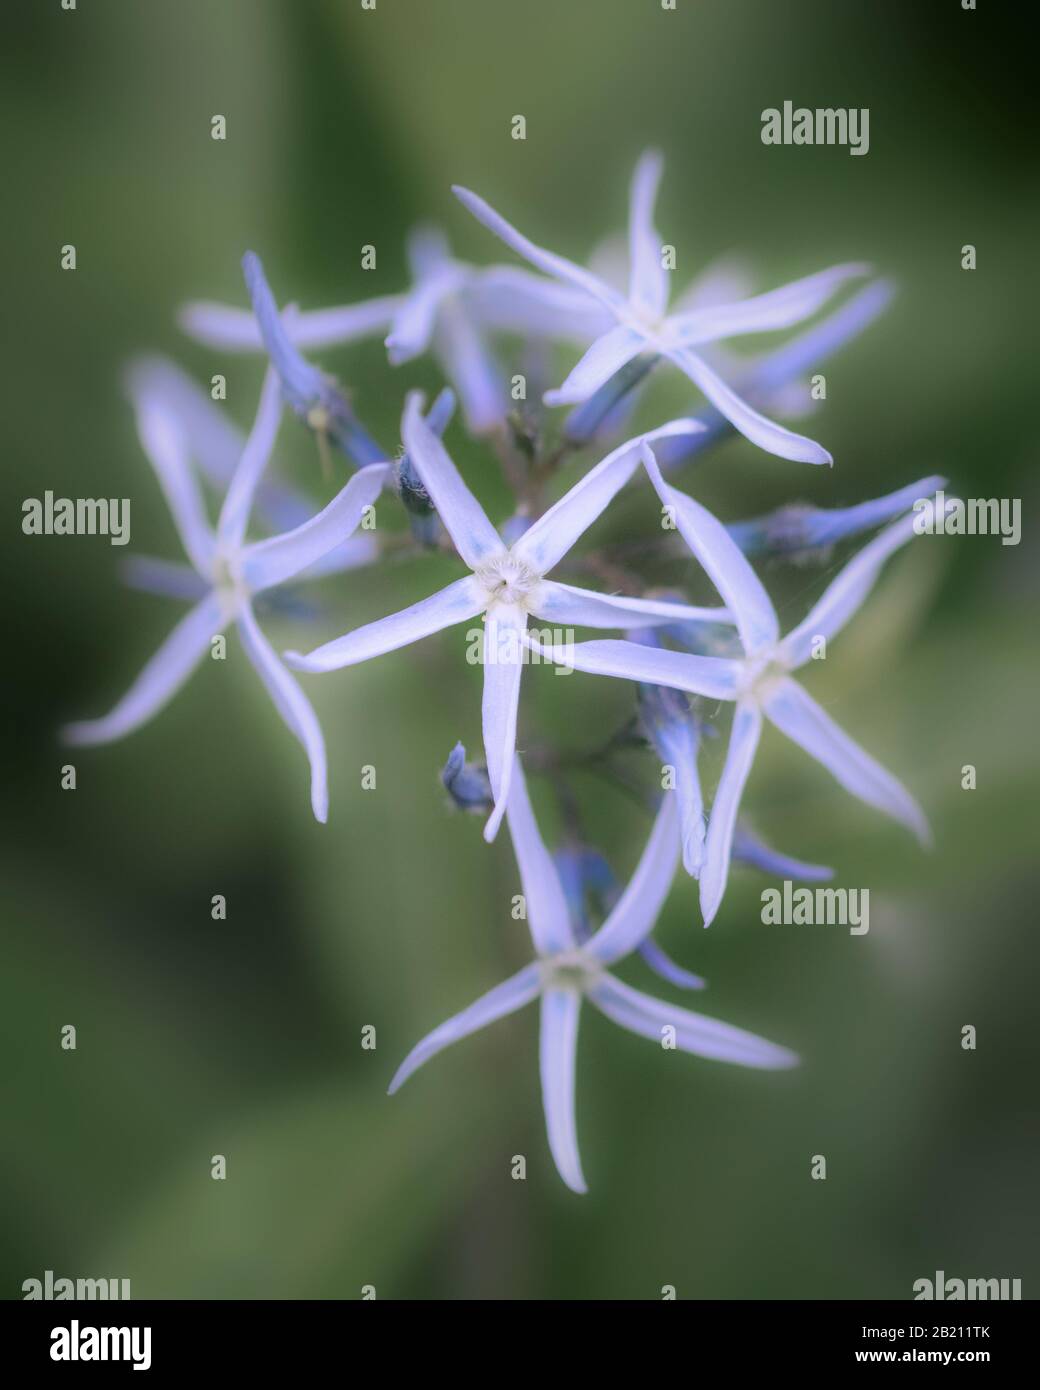 Eastern blue star flower head close up Stock Photo